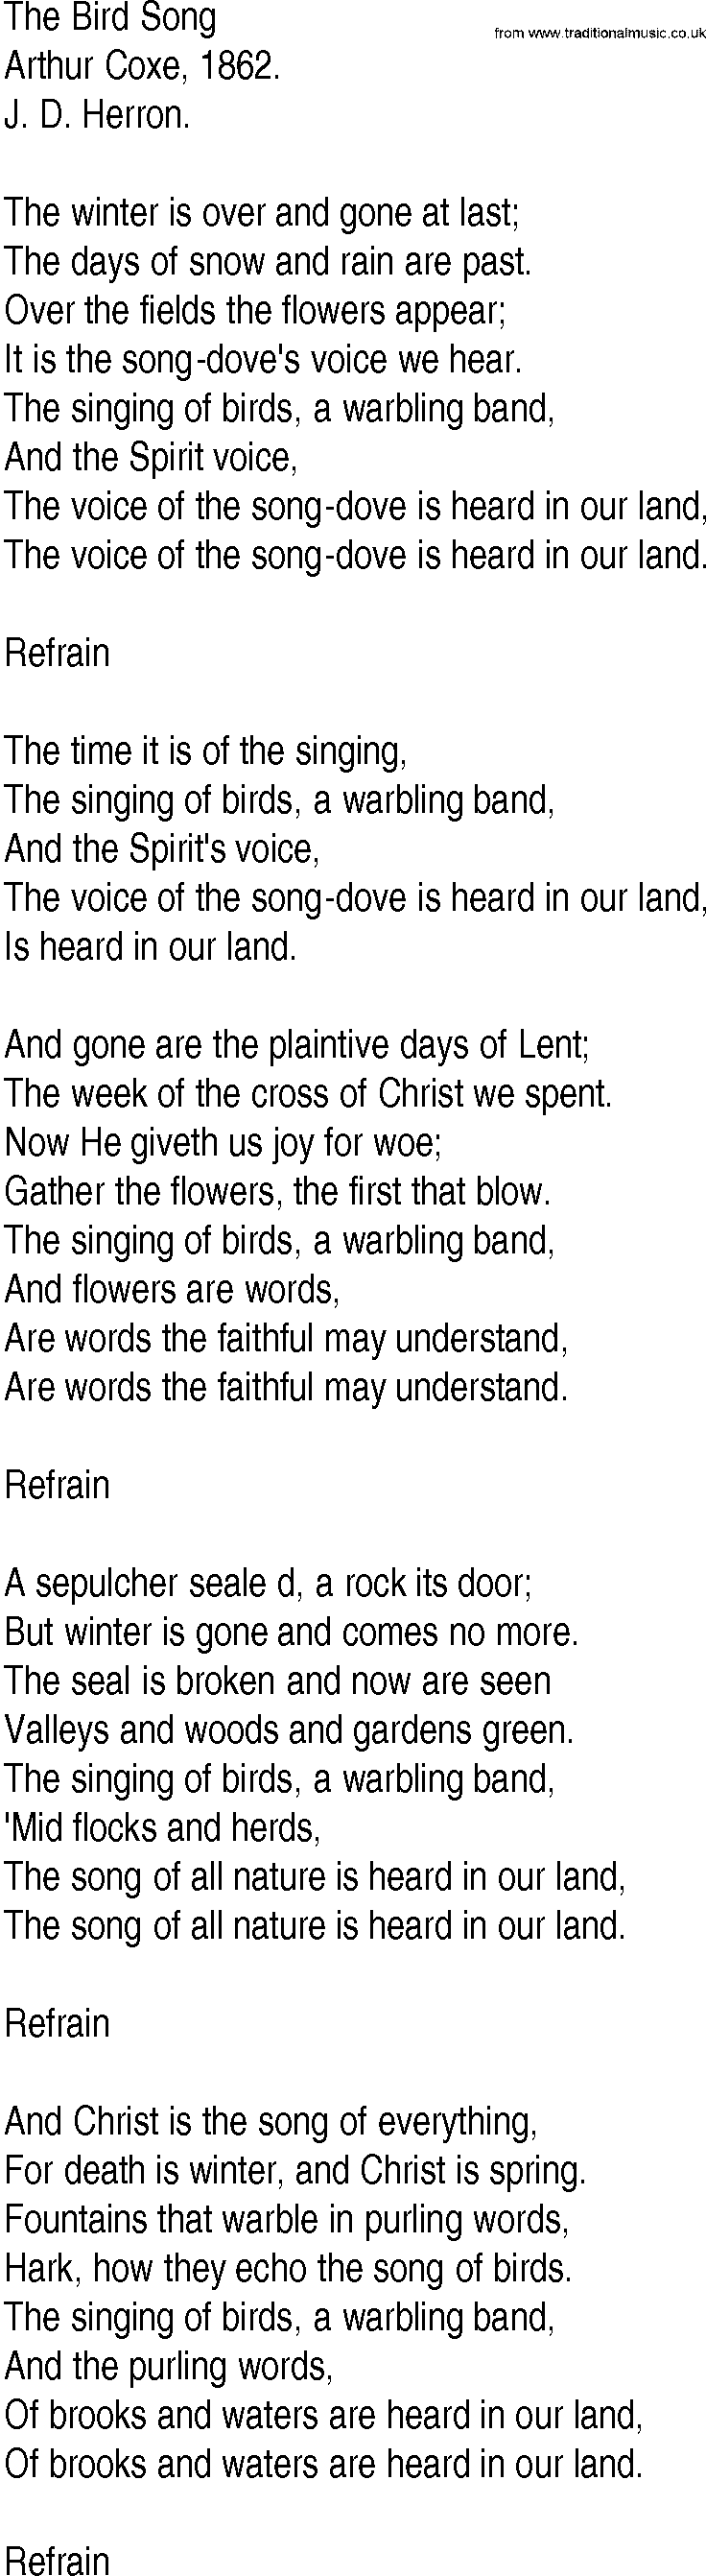 Hymn and Gospel Song: The Bird Song by Arthur Coxe lyrics